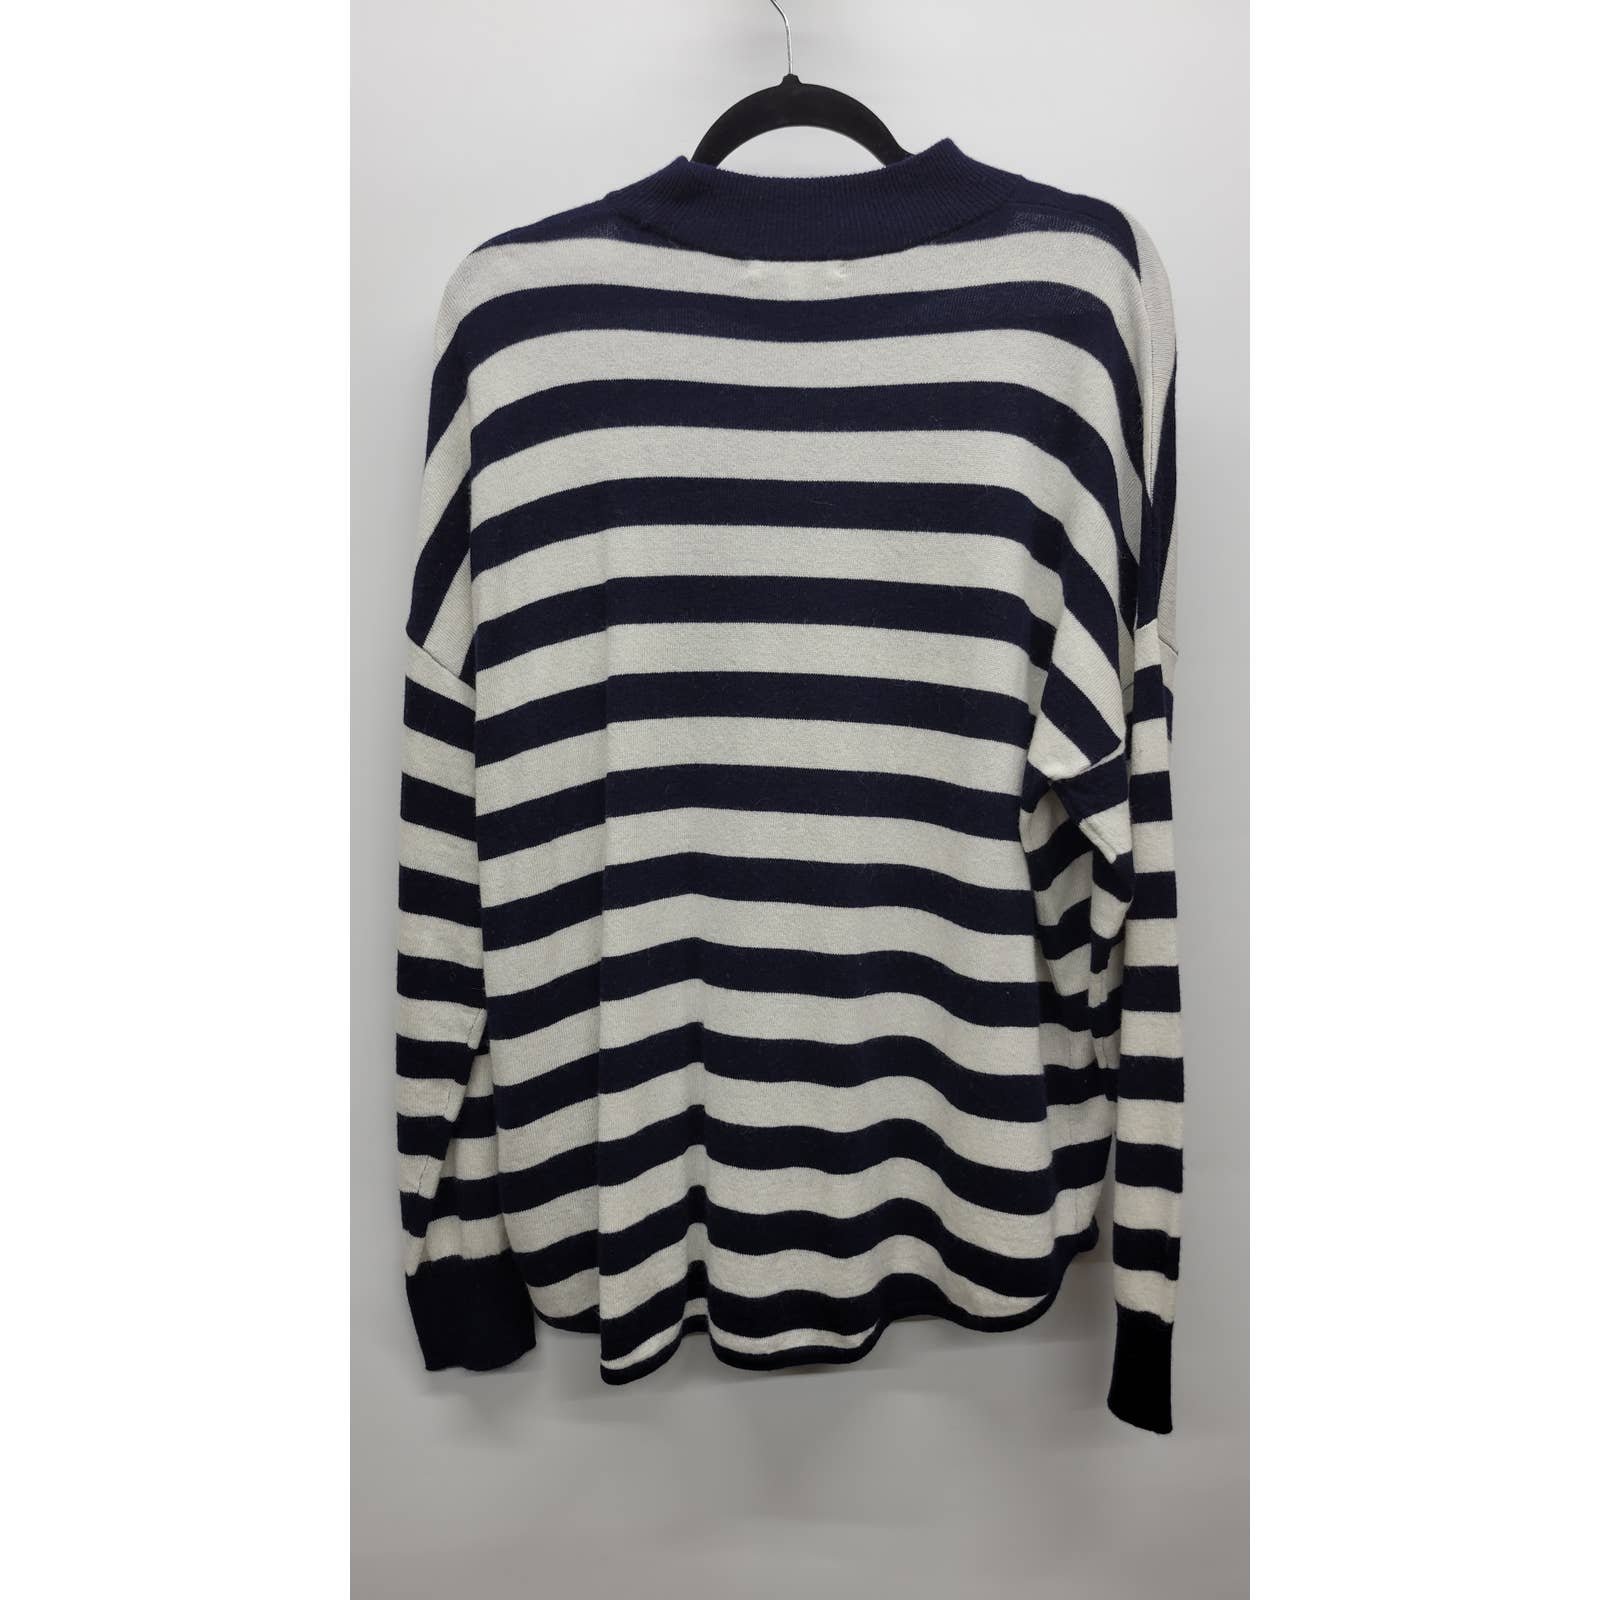 Comfortable Madewell Ashbury Mockneck Sweater Kelsey Stripe i6PTTJsGt Low Price